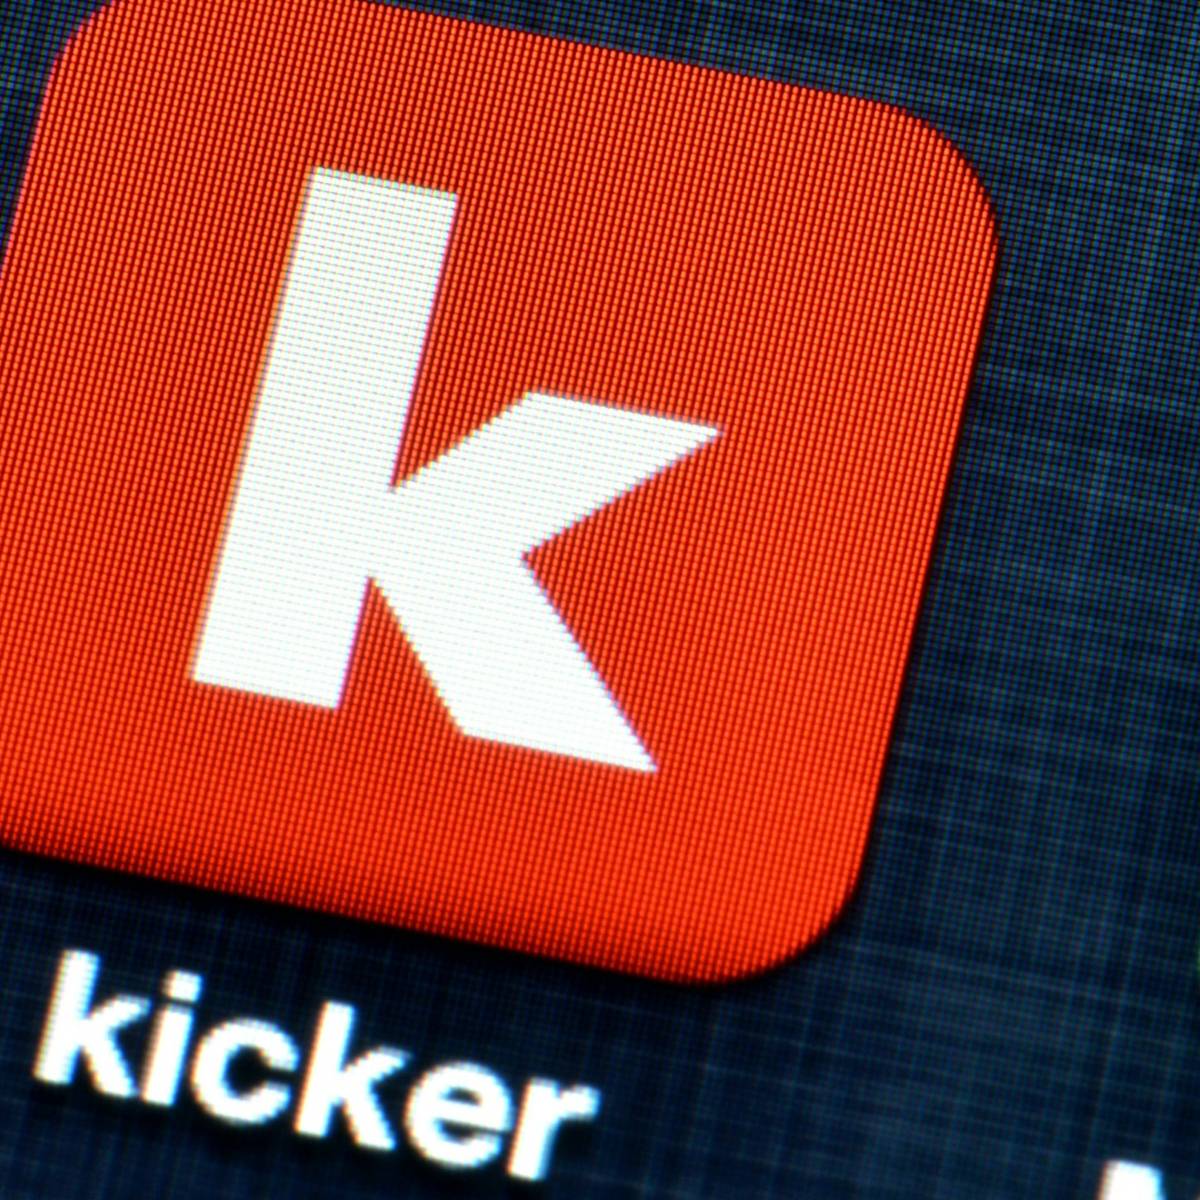 kicker startet neues Podcast-Format